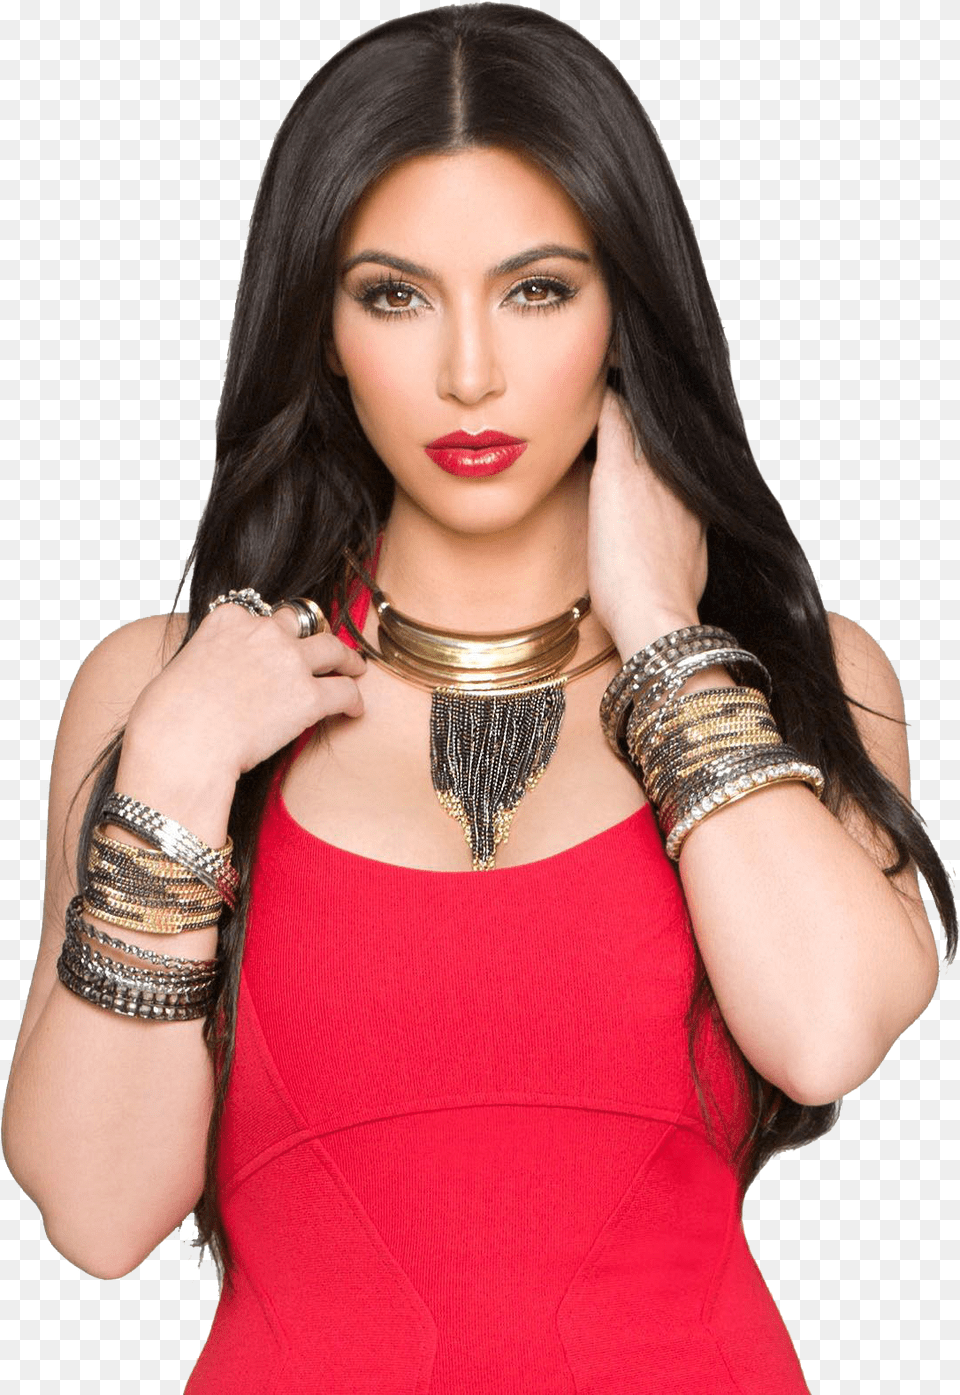 Kim Kardashian By Maarcop Christiane Coari, Accessories, Jewelry, Ornament, Necklace Free Png